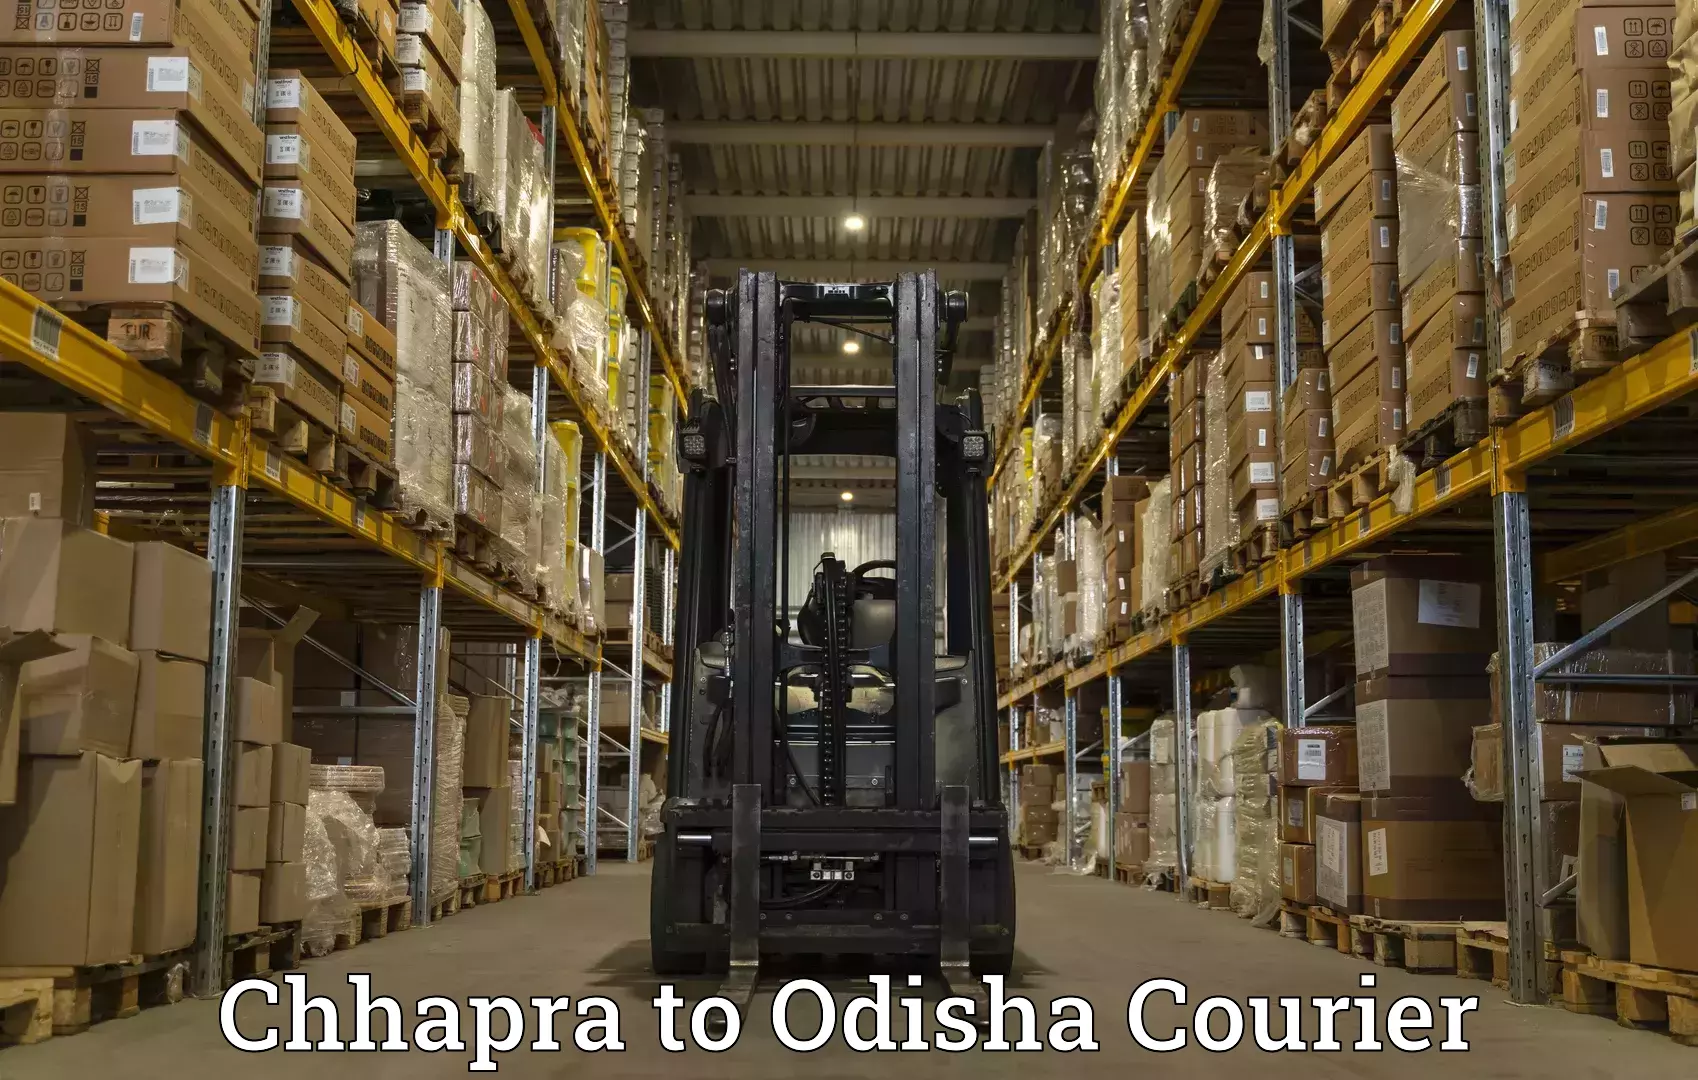 Global shipping networks Chhapra to Pipili